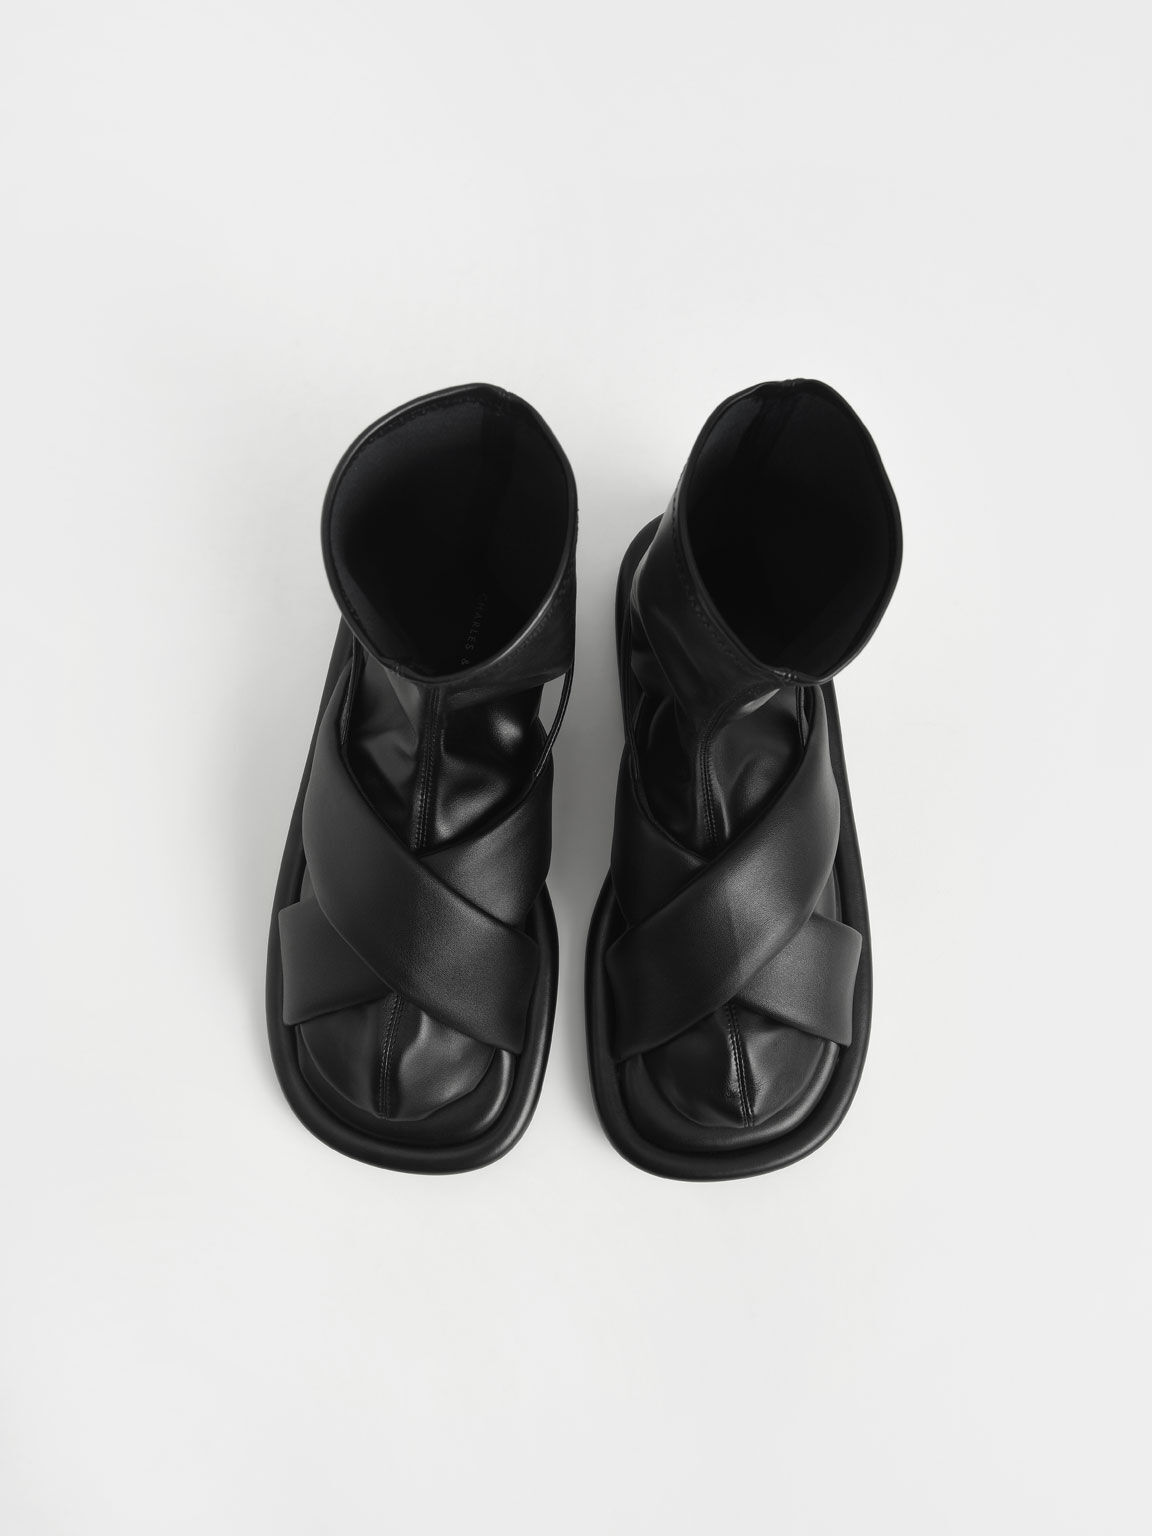 Sepatu Lucile Flat Calf Boots, Black, hi-res